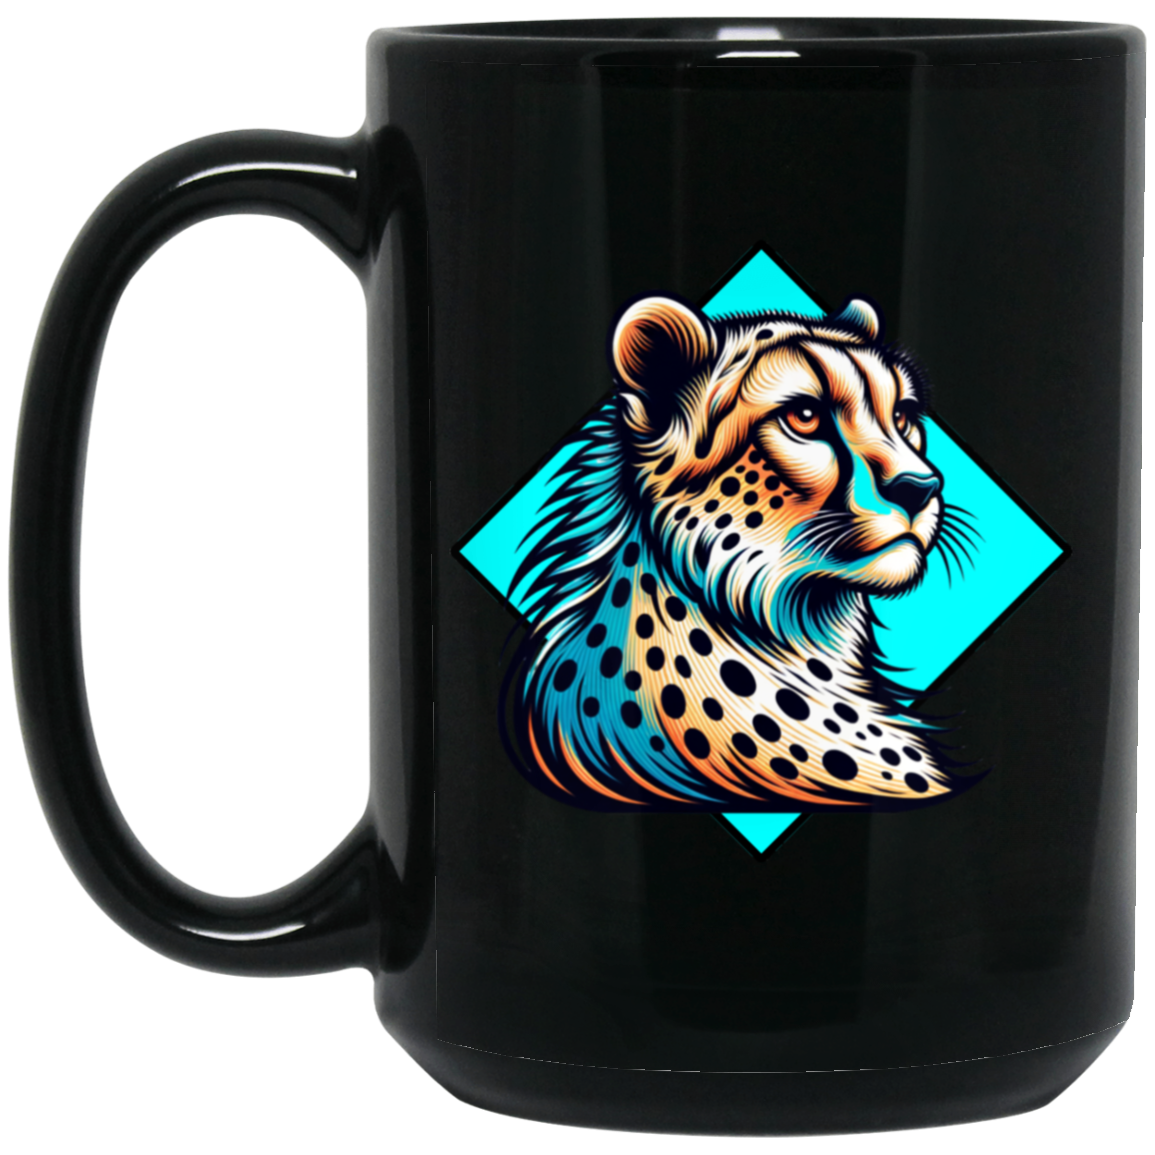 Cheetah on Point - Mugs